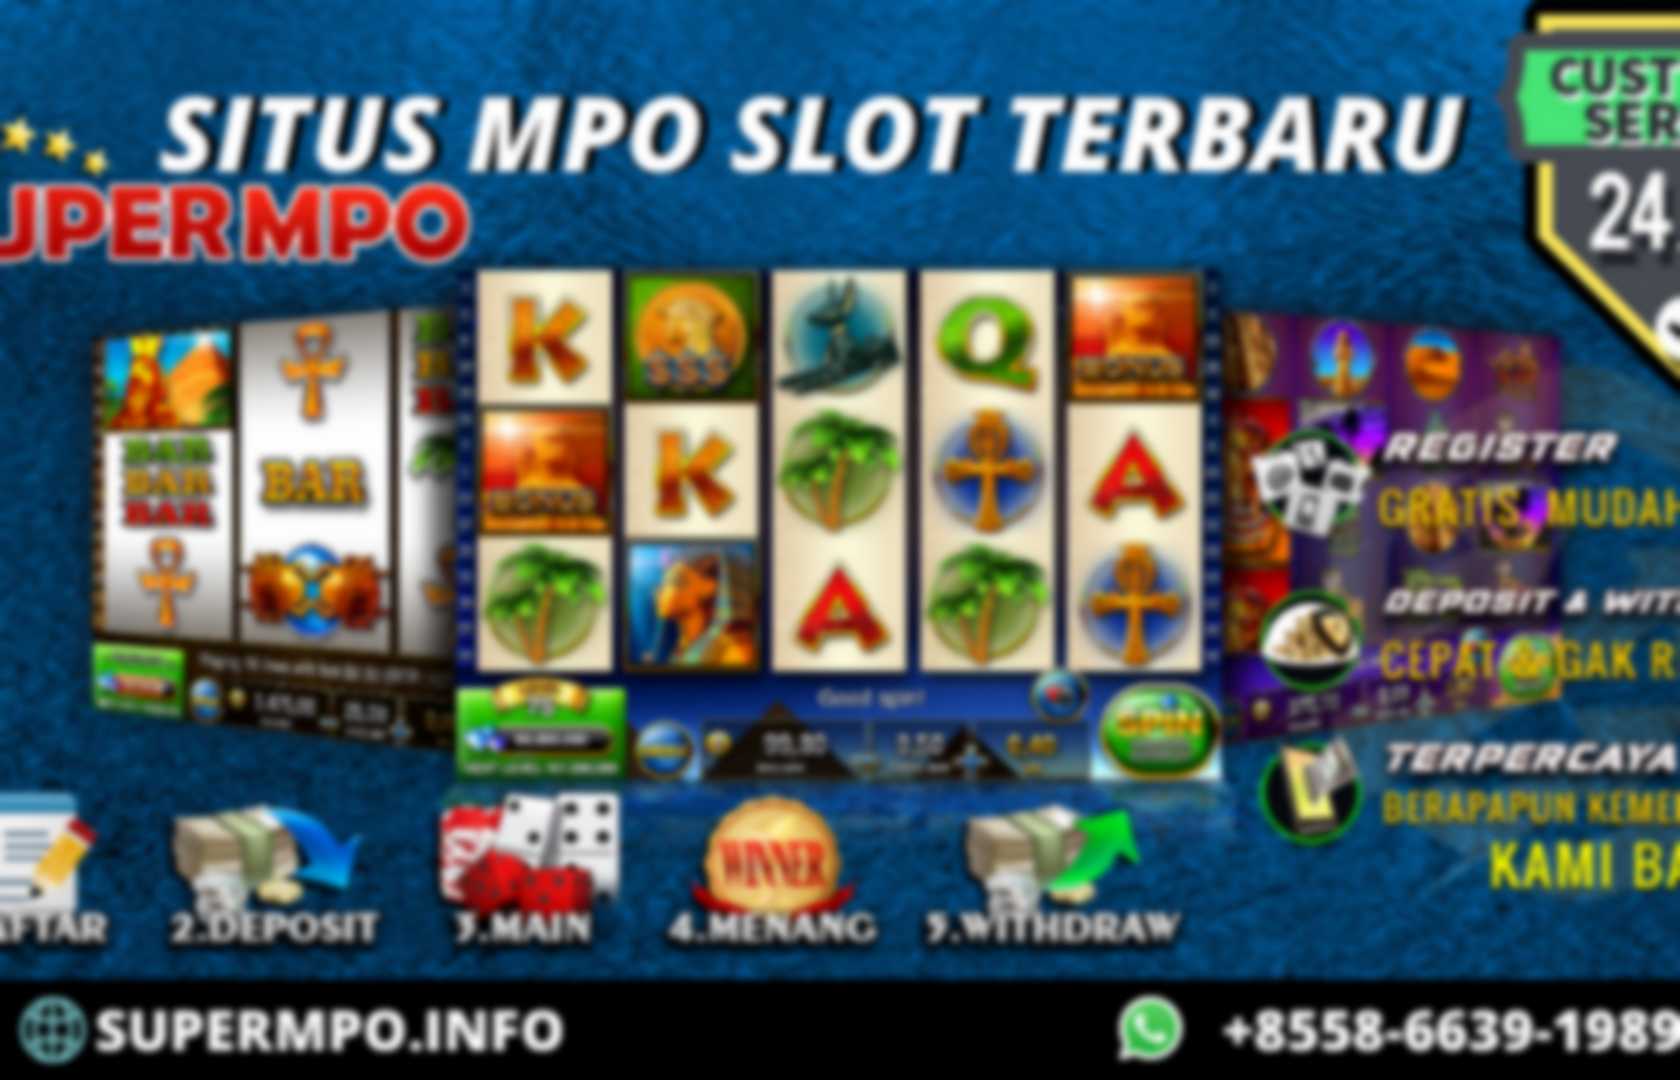 Supermpo Situs QQ Slot Online Terbaru (supermpo) | Pearltrees